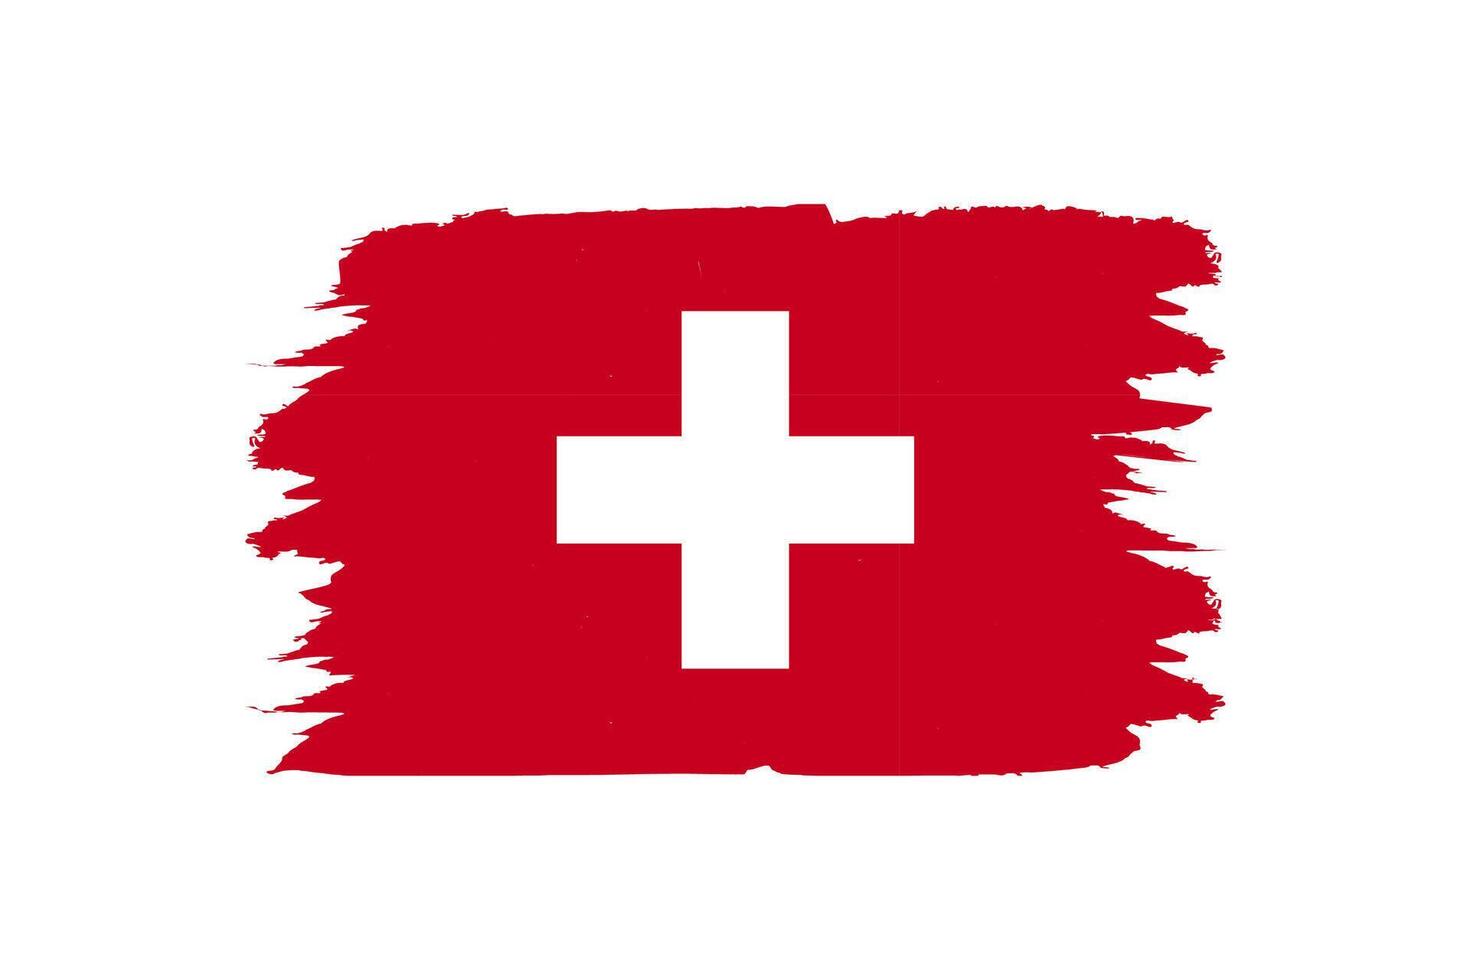 Flag of Switzerland vector illustration